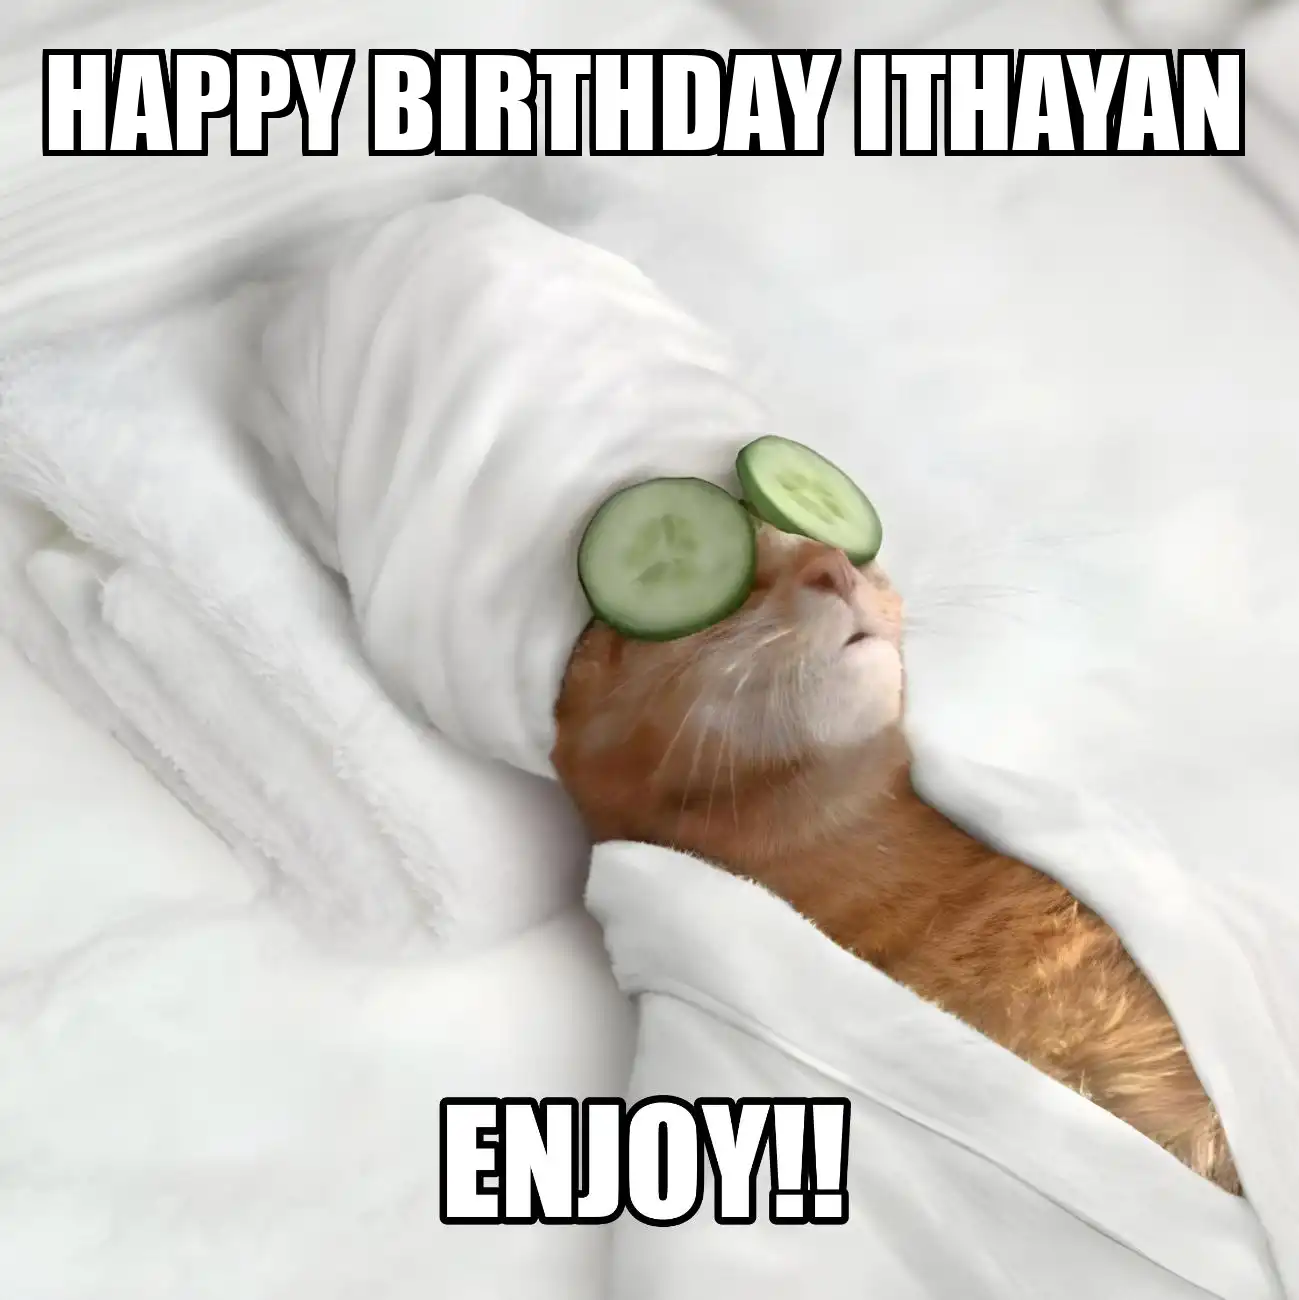 Happy Birthday Ithayan Enjoy Cat Meme